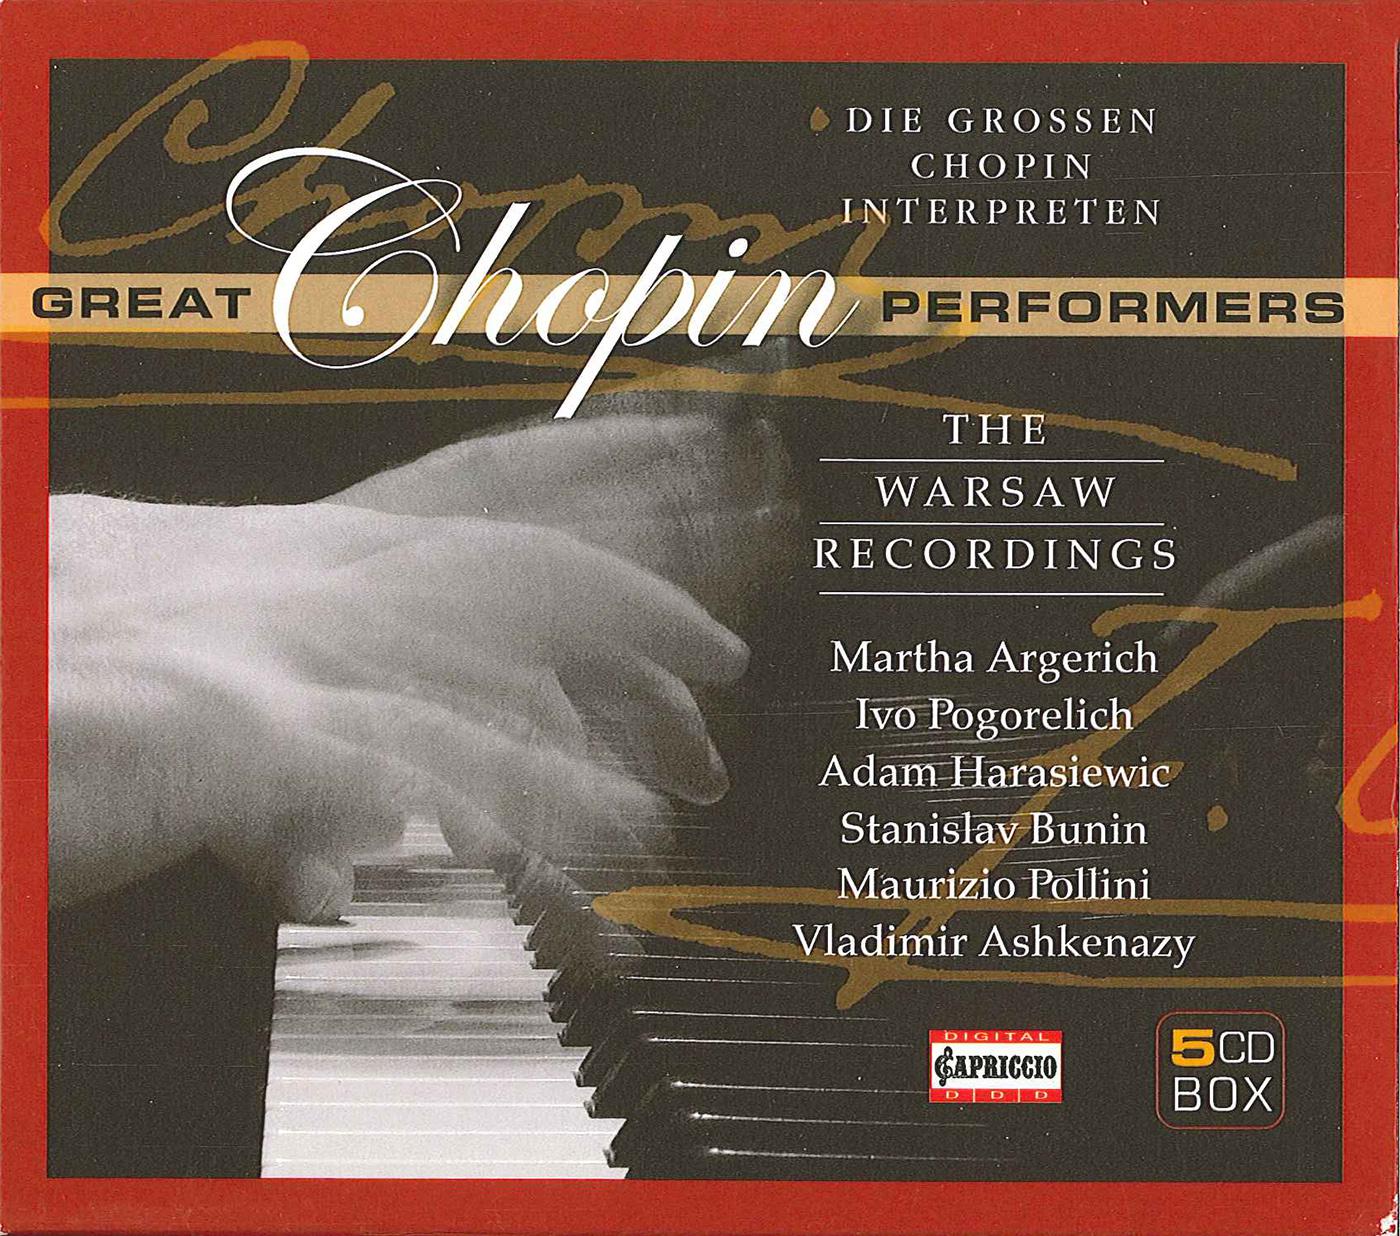 CHOPIN, F.: Piano Music (The Great Chopin Performances)